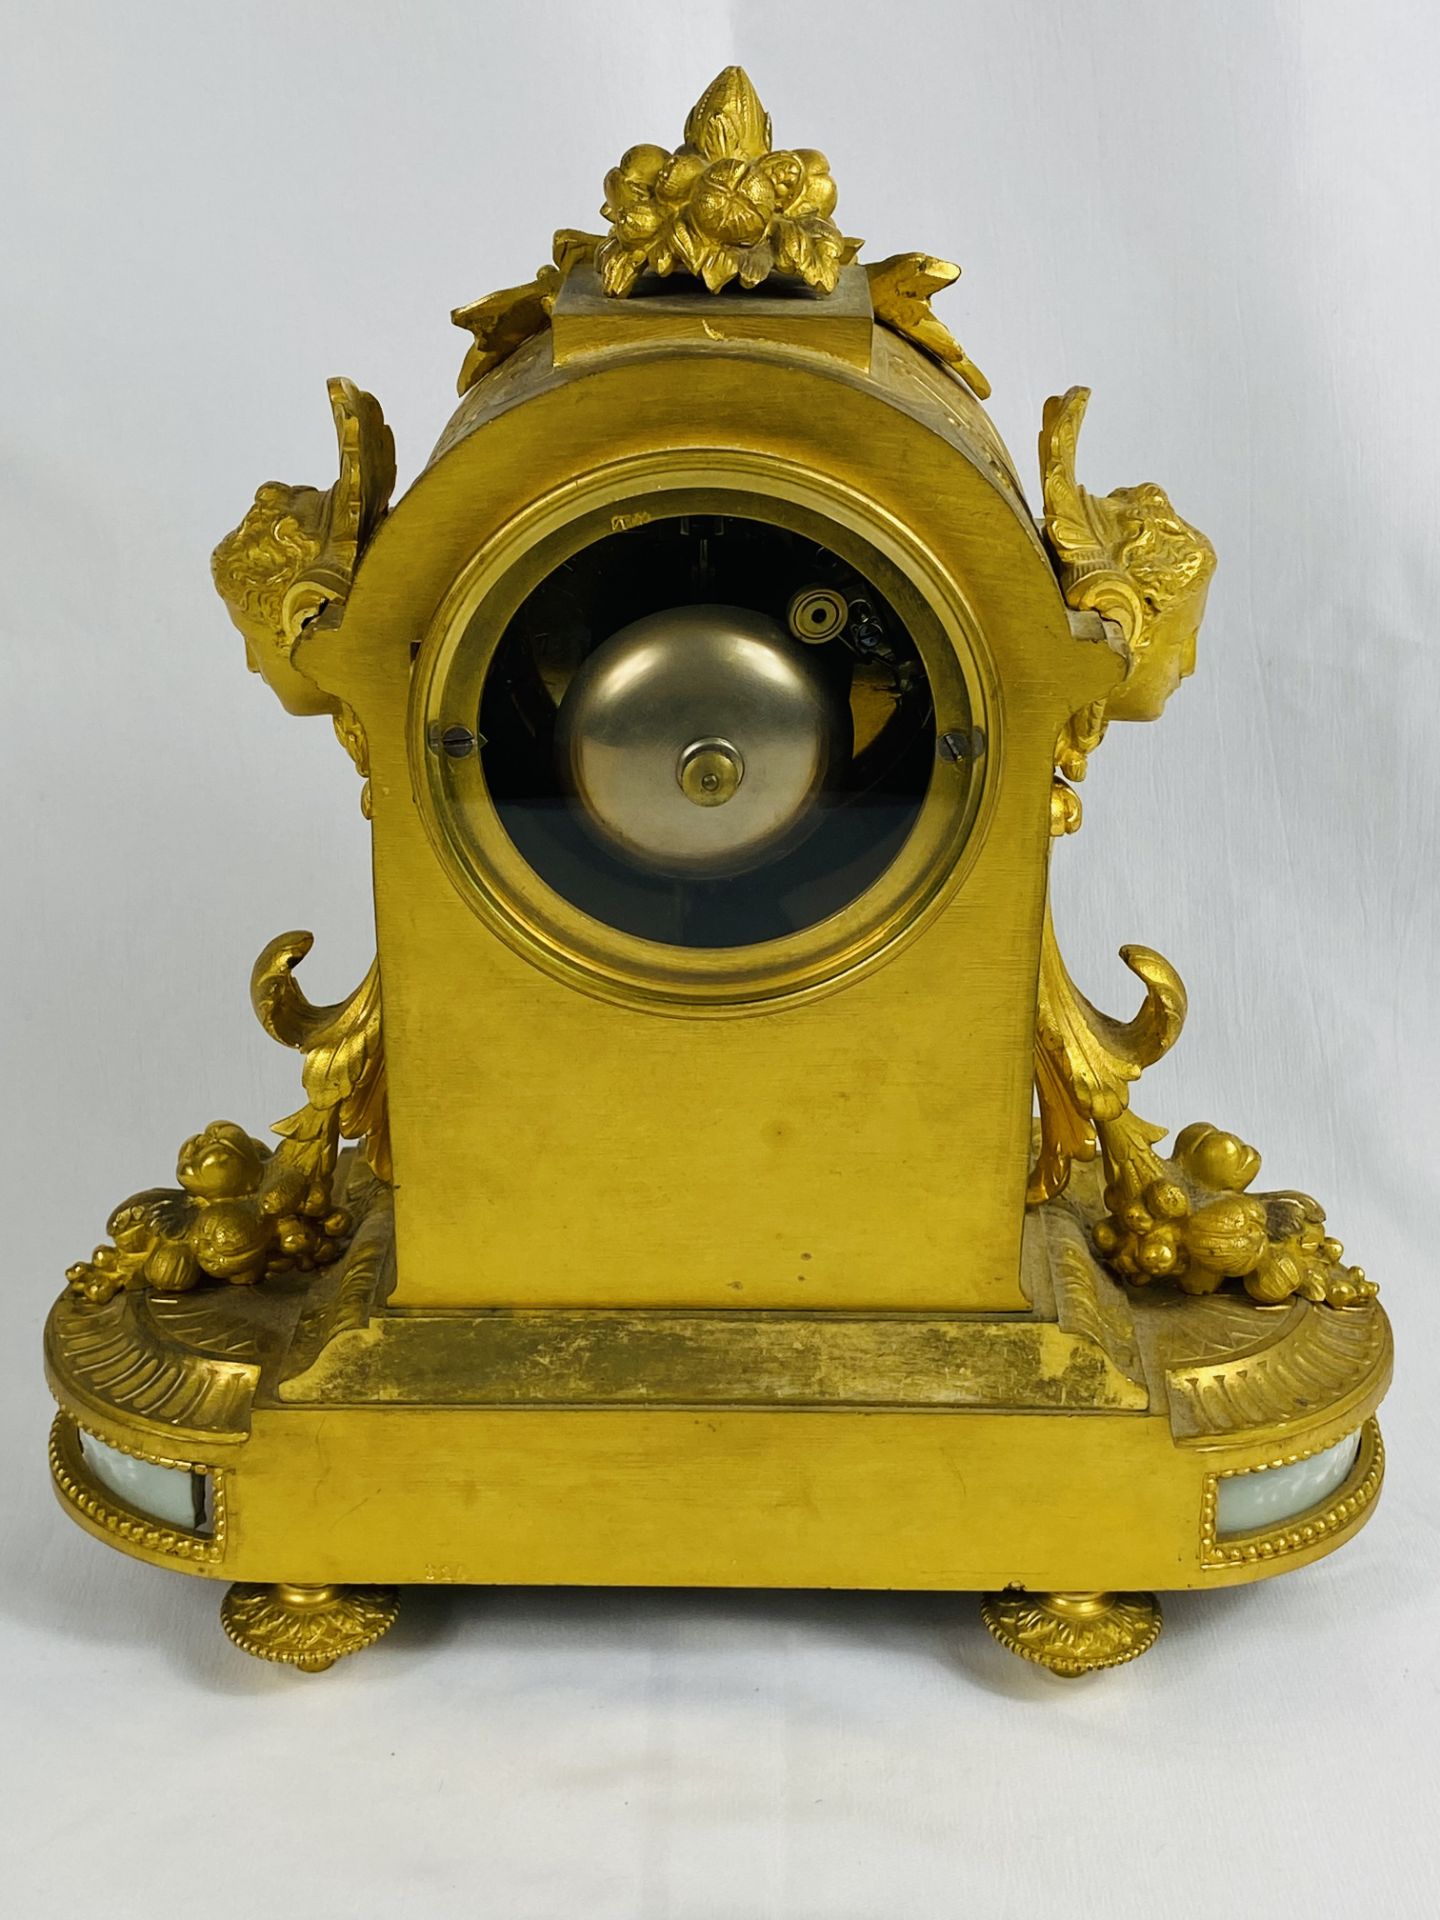 French ormolu mantel clock - Image 3 of 4